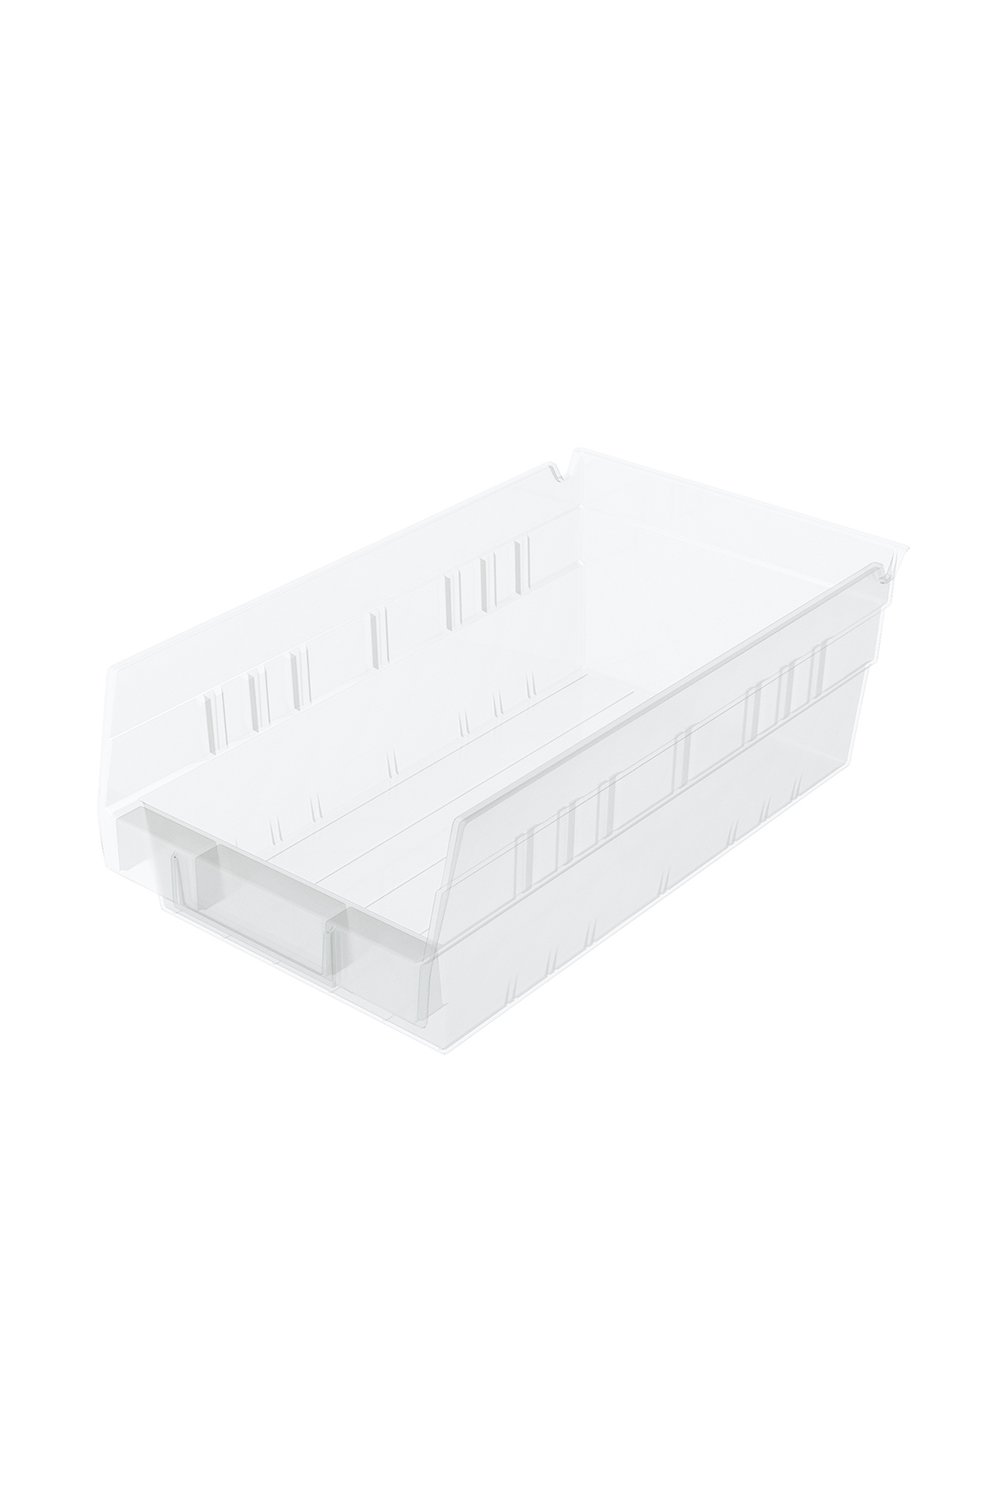 Shelf Bin for 12"D Shelves Bins & Containers Acart 11-5/8'' x 6-5/8'' x 4'' Clear 